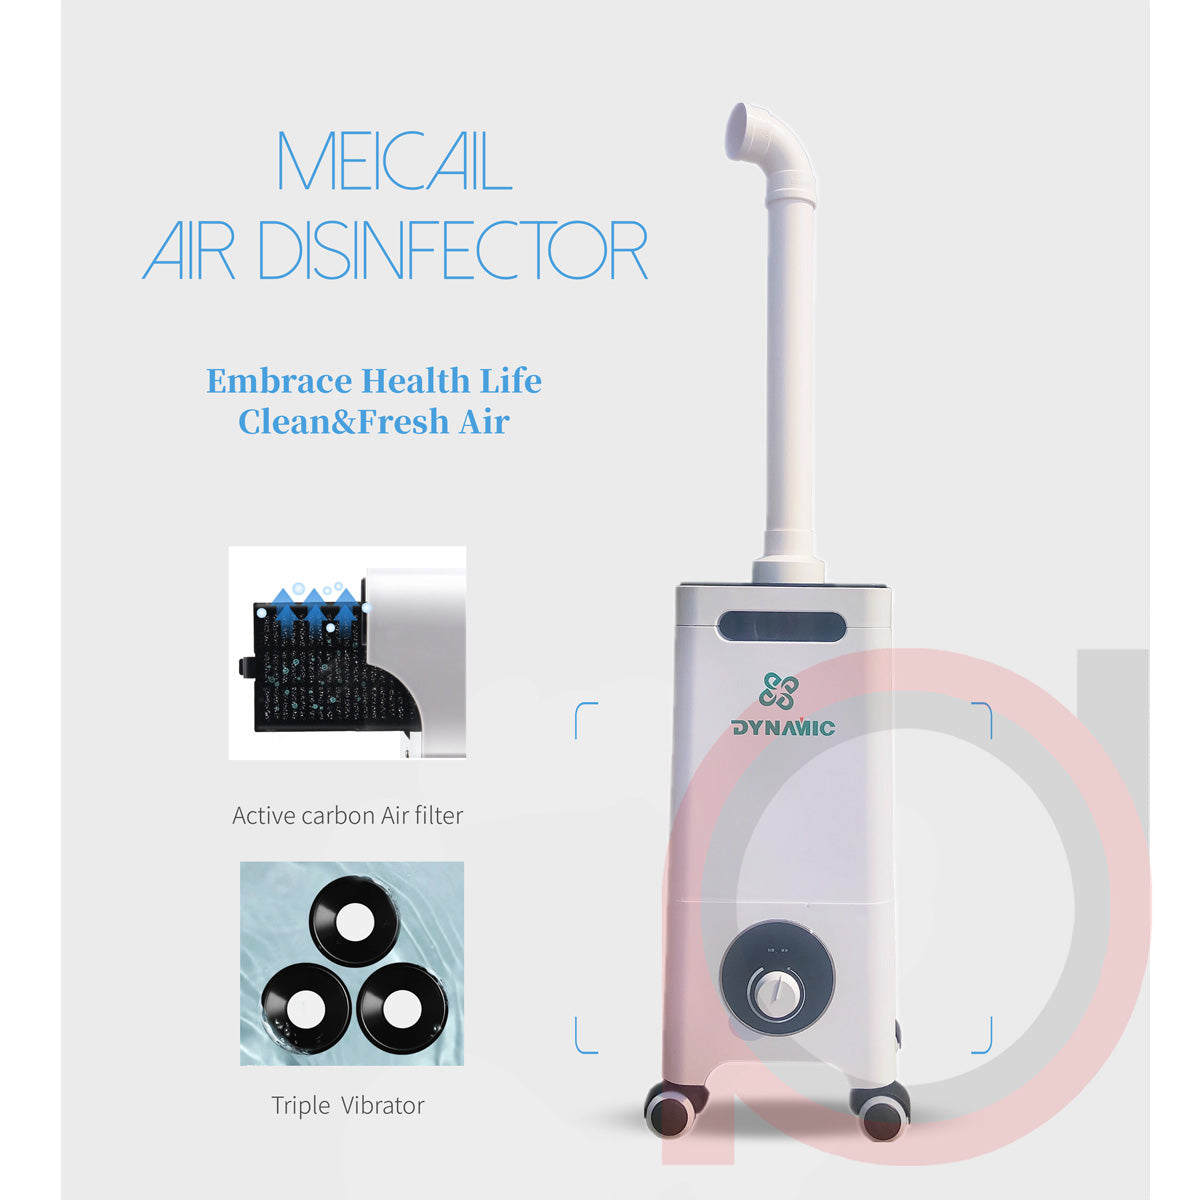 Air Disinfector